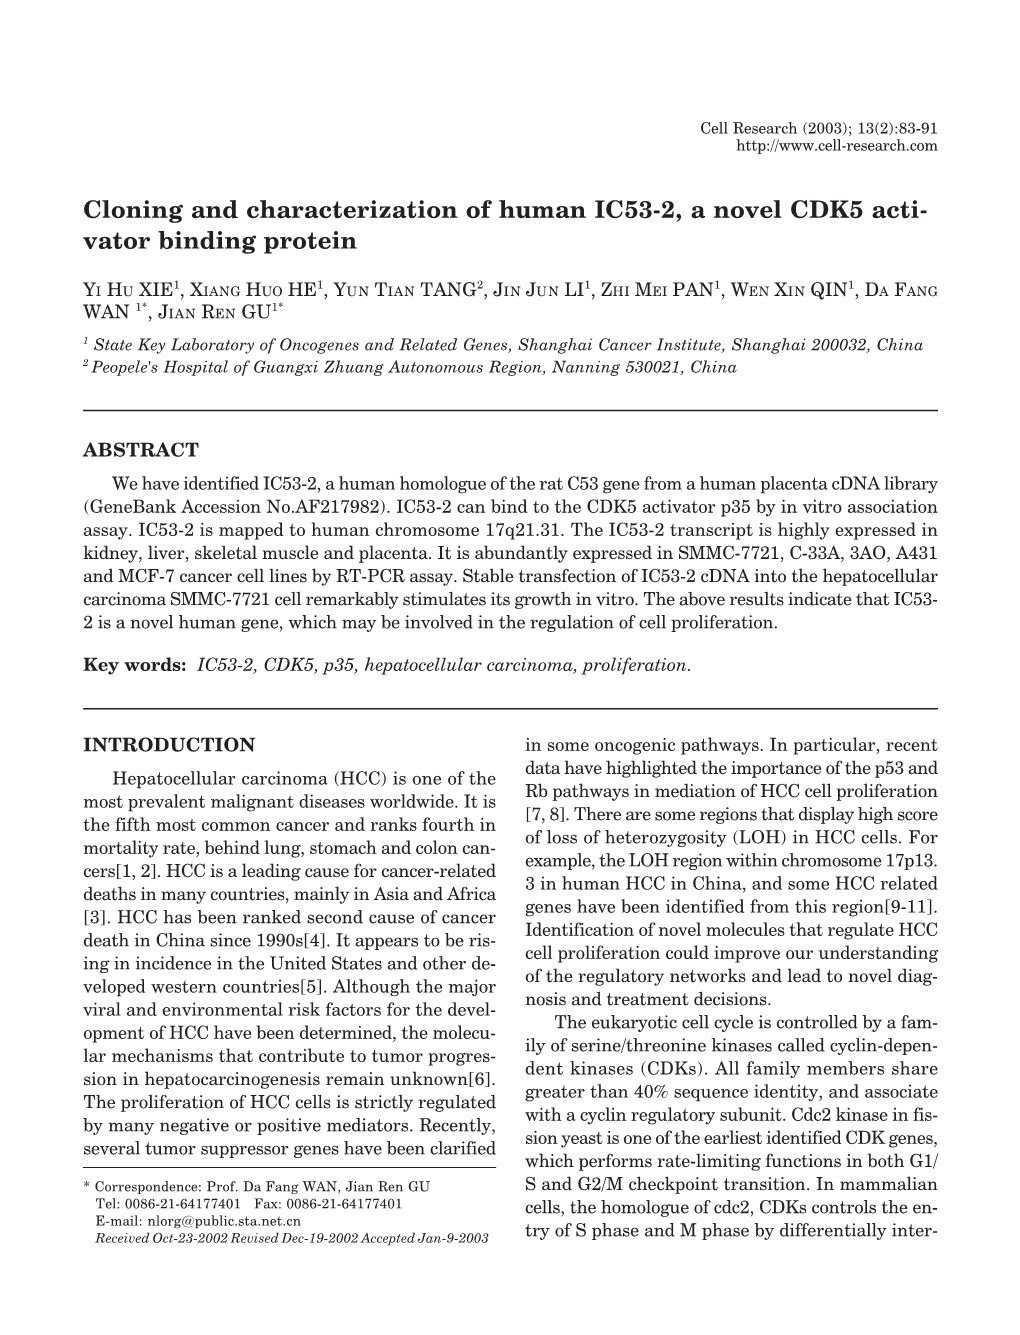 Cloning and Characterization of Human IC53-2, a Novel CDK5 Acti- Vator Binding Protein